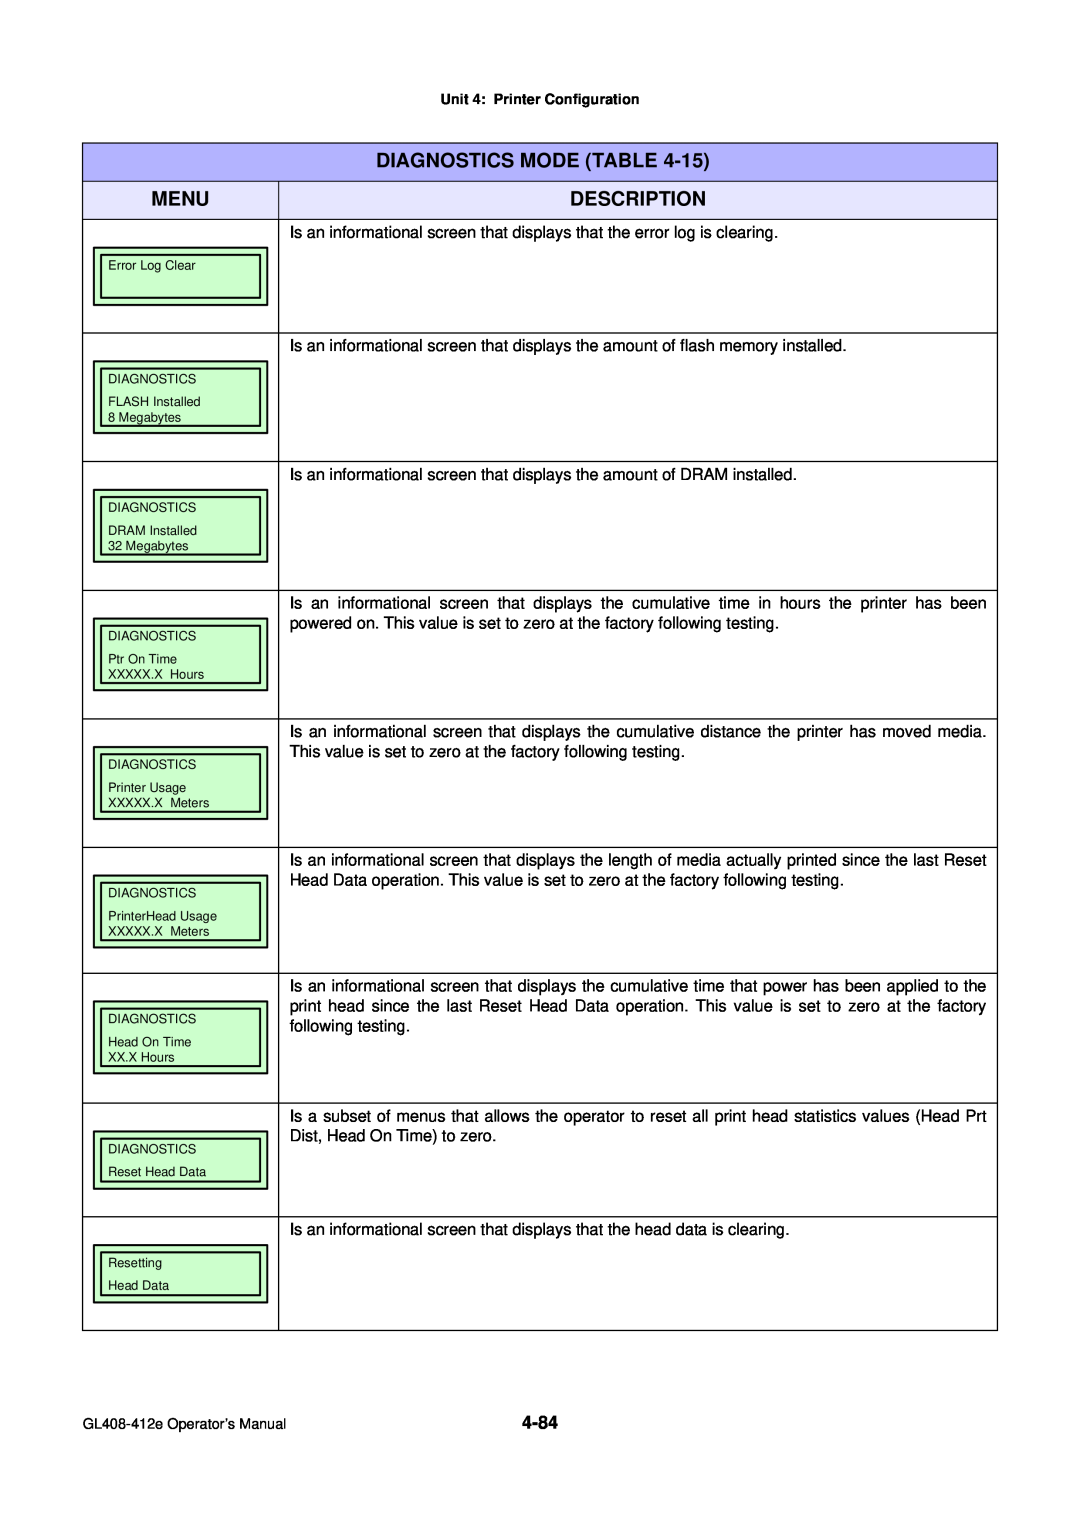 SATO GL4XXE manual Diagnostics Mode Table, Menu, Description 